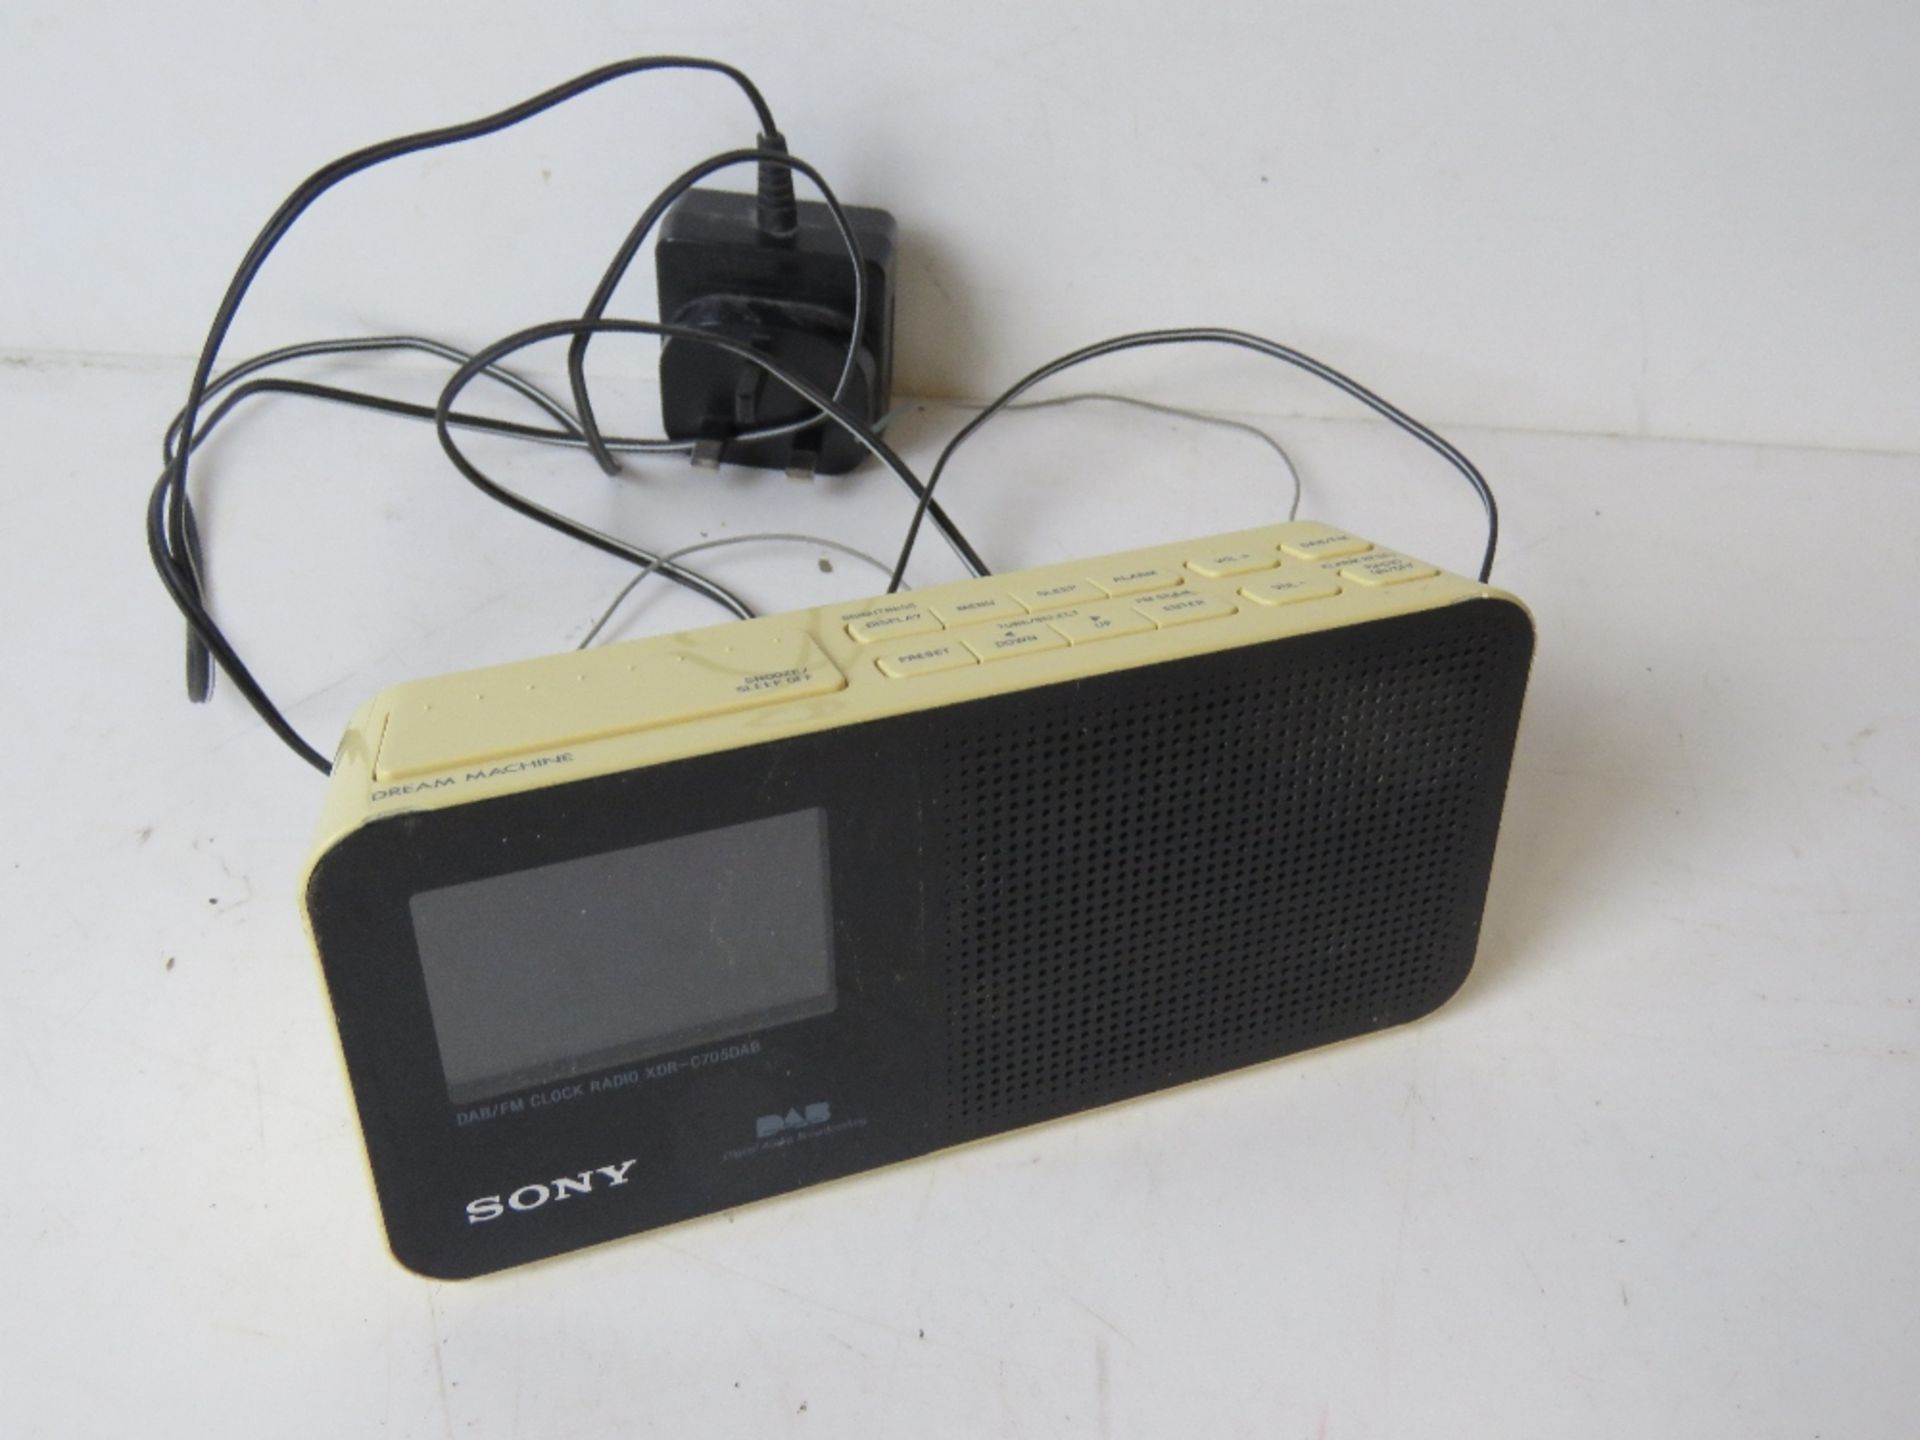 A Sony Dream Machine alarm clock DAB radio.